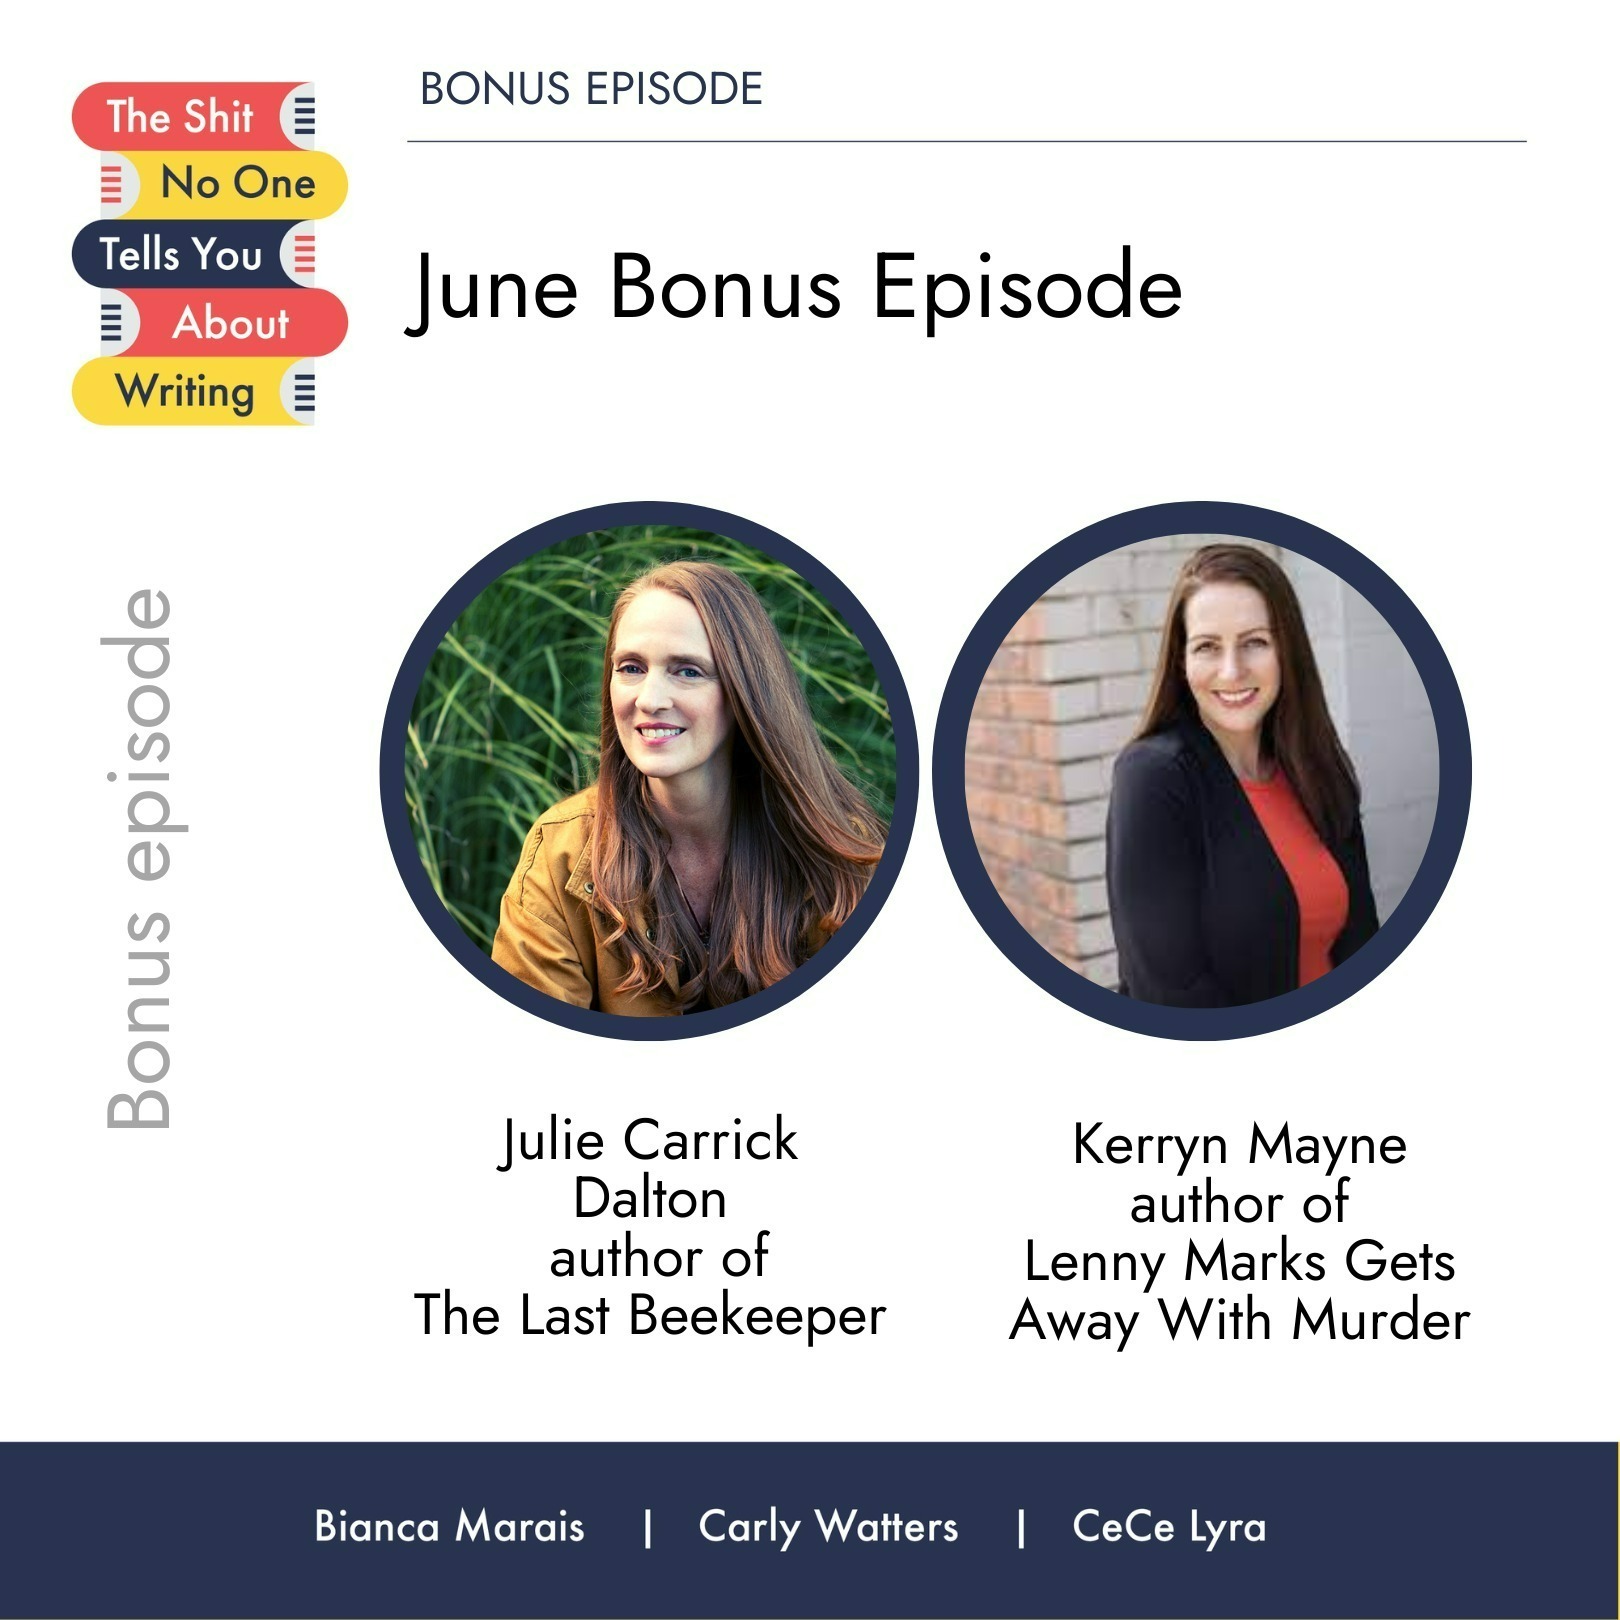 June Bonus Episode with Julie Carrick Dalton and Kerryn Mayne